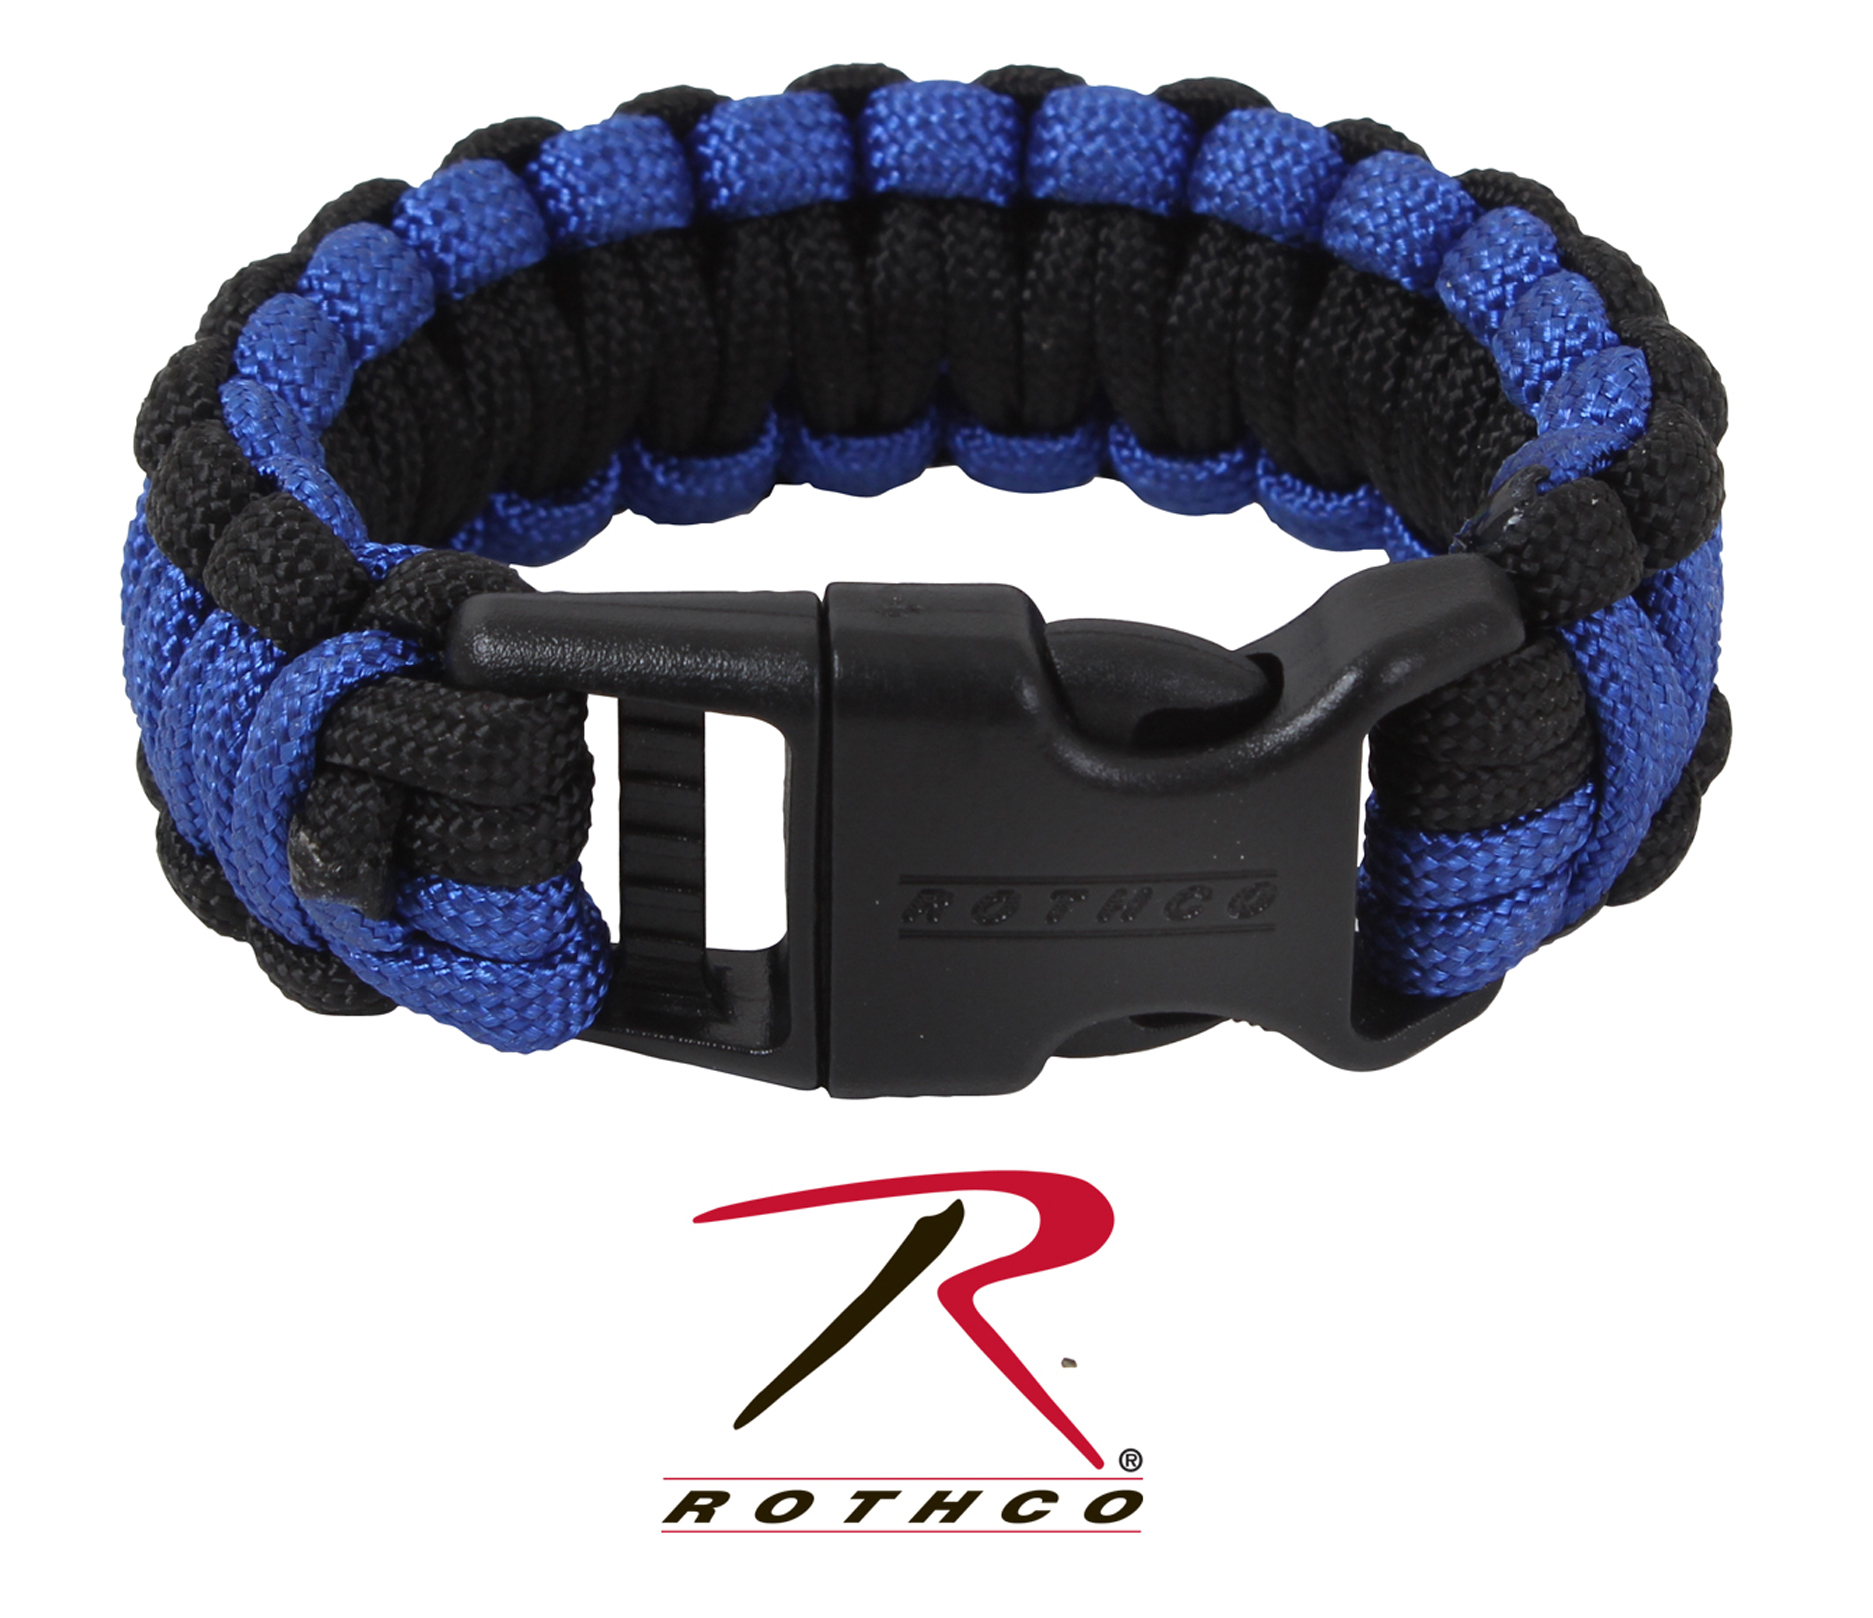 Make a Police Thin Blue Line Paracord Survival Bracelet  BoredParacordcom   YouTube